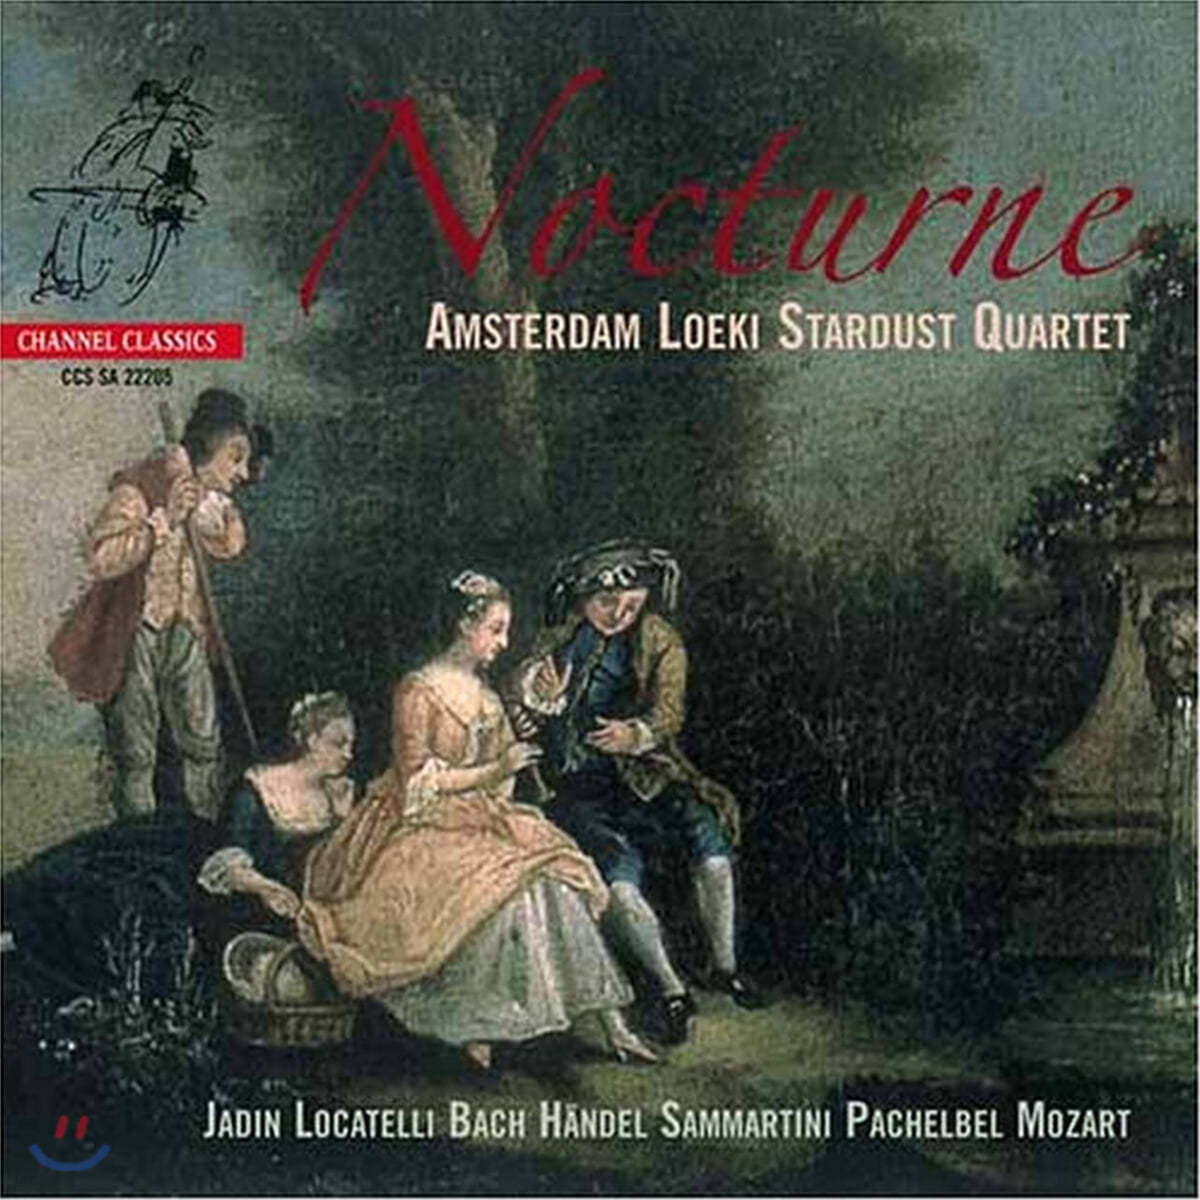 Amsterdam Loeki Stardust Quartet 리코더 사중주로 듣는 바로크 음악 - 암스테르담 뢰에키 사중주단 (Nocturne)